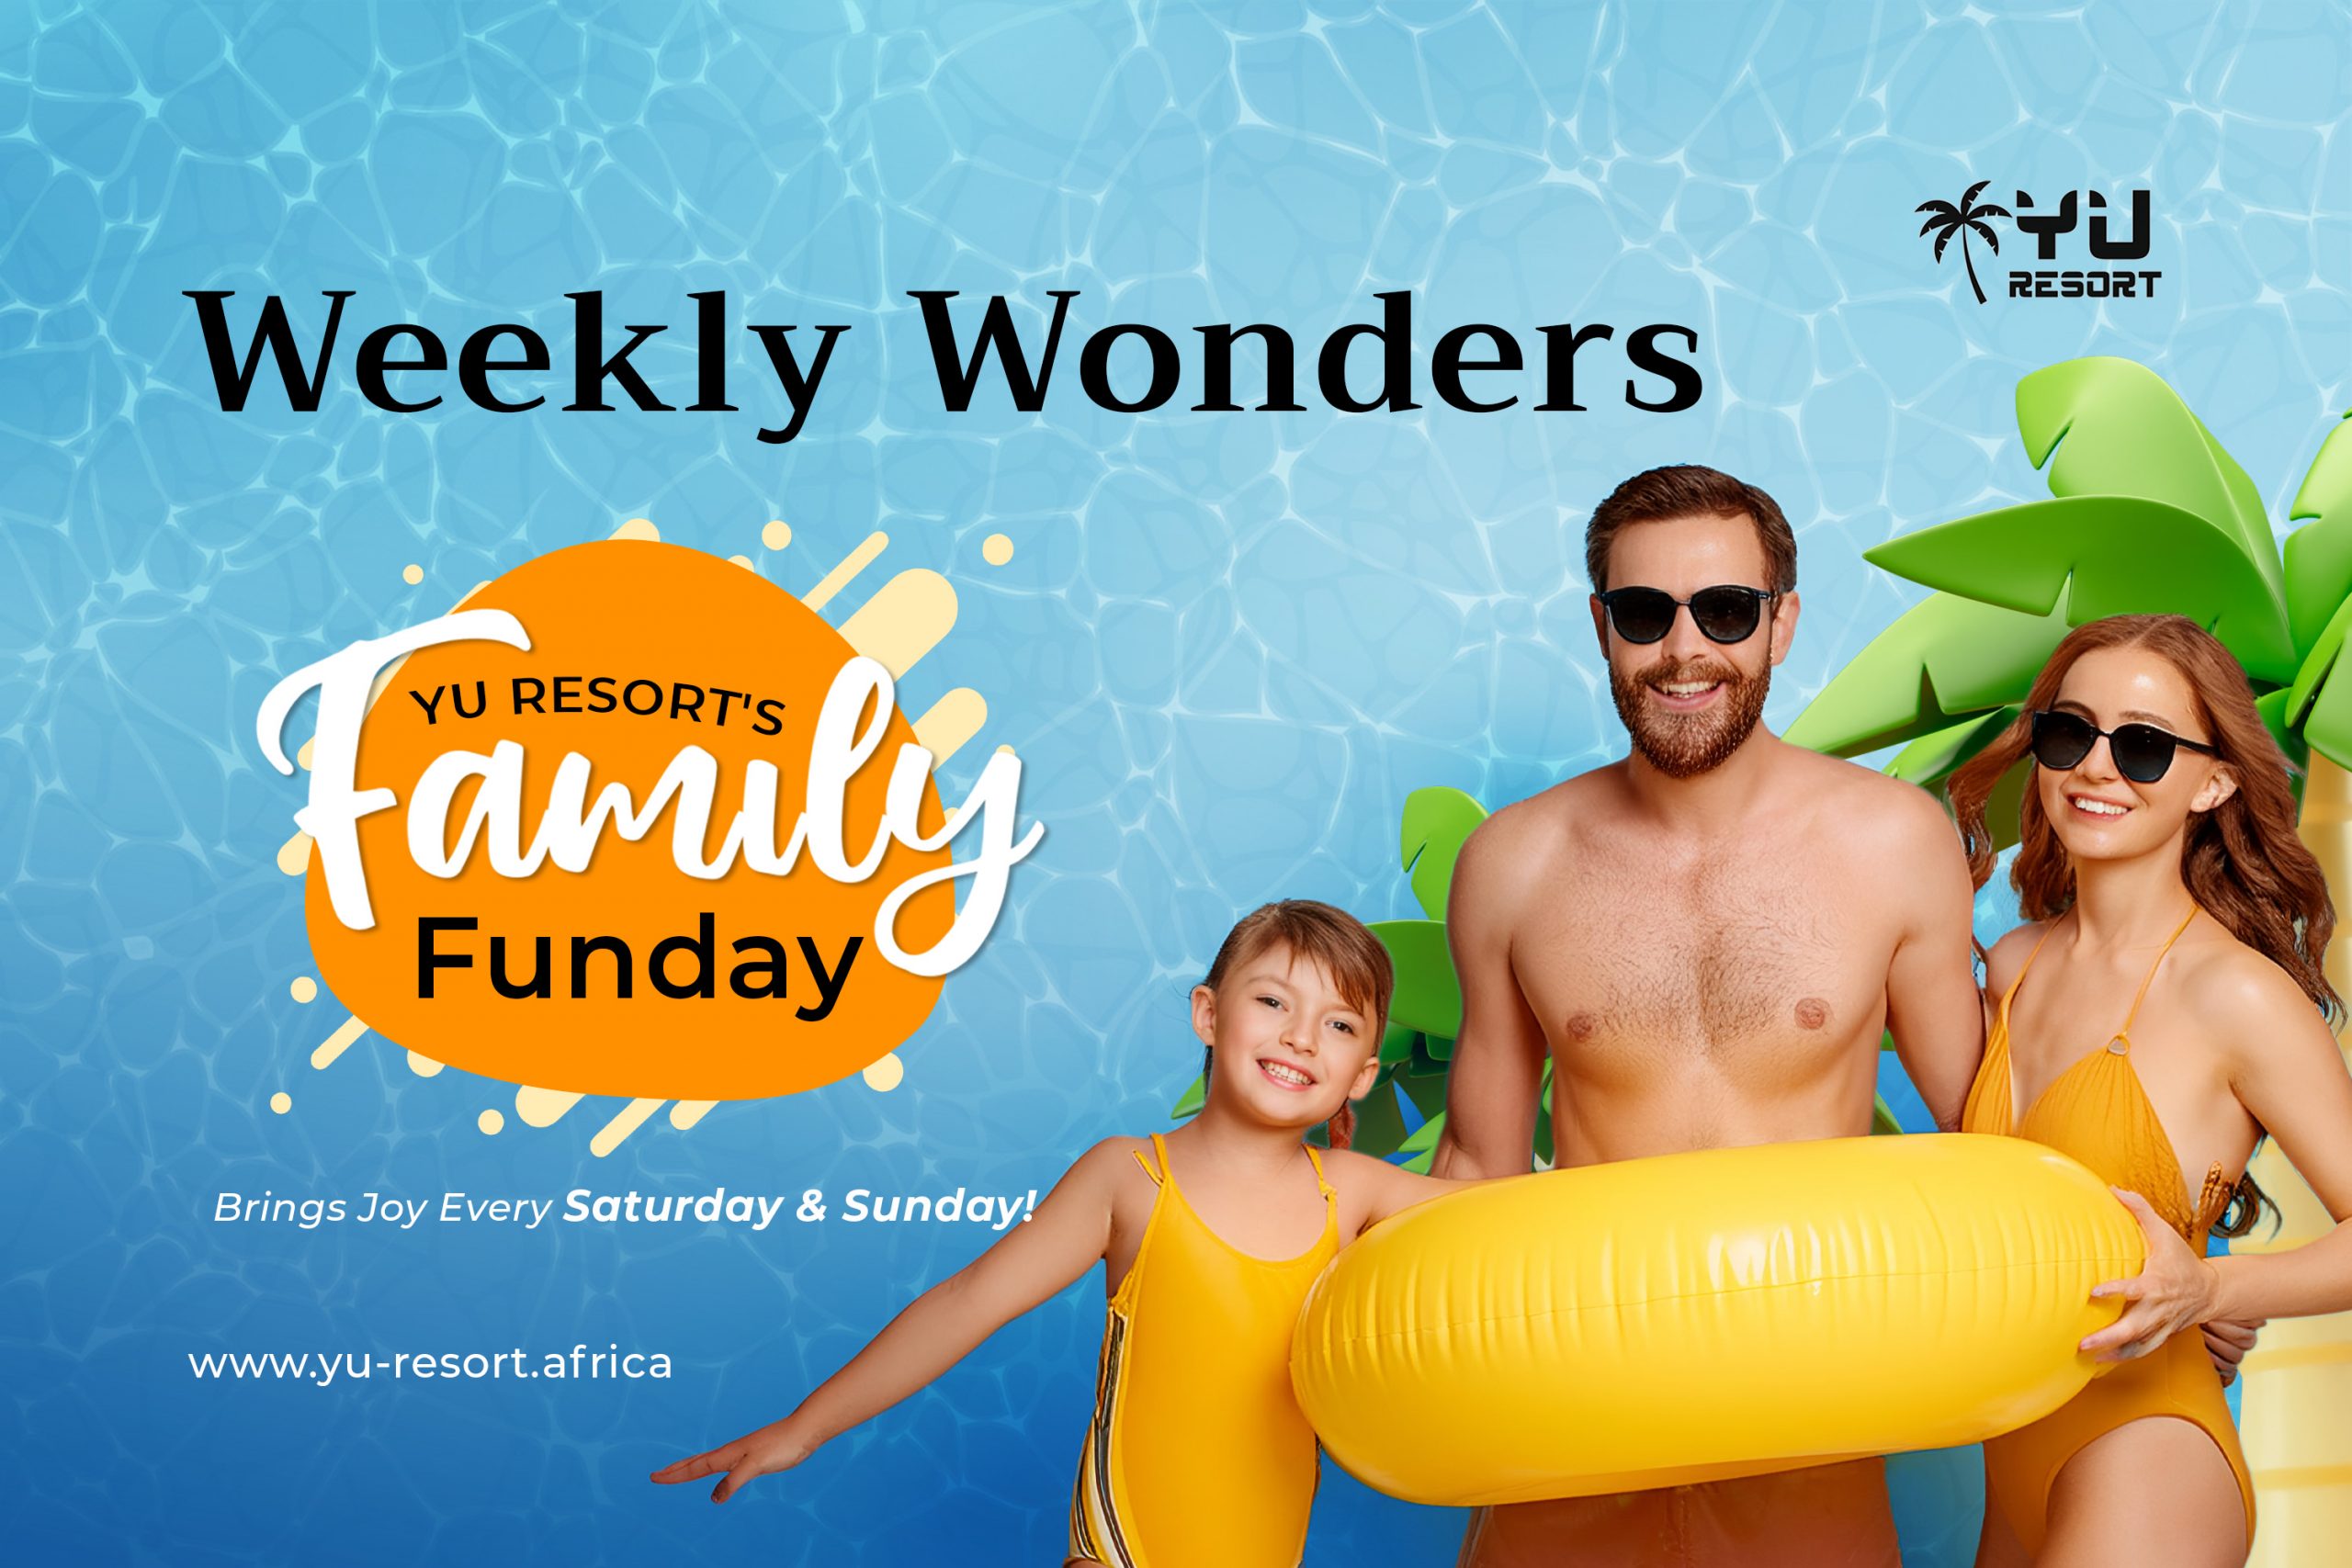 Weekly Wonders: YU Resort's Family Funday Brings Joy Every Saturday & Sunday!